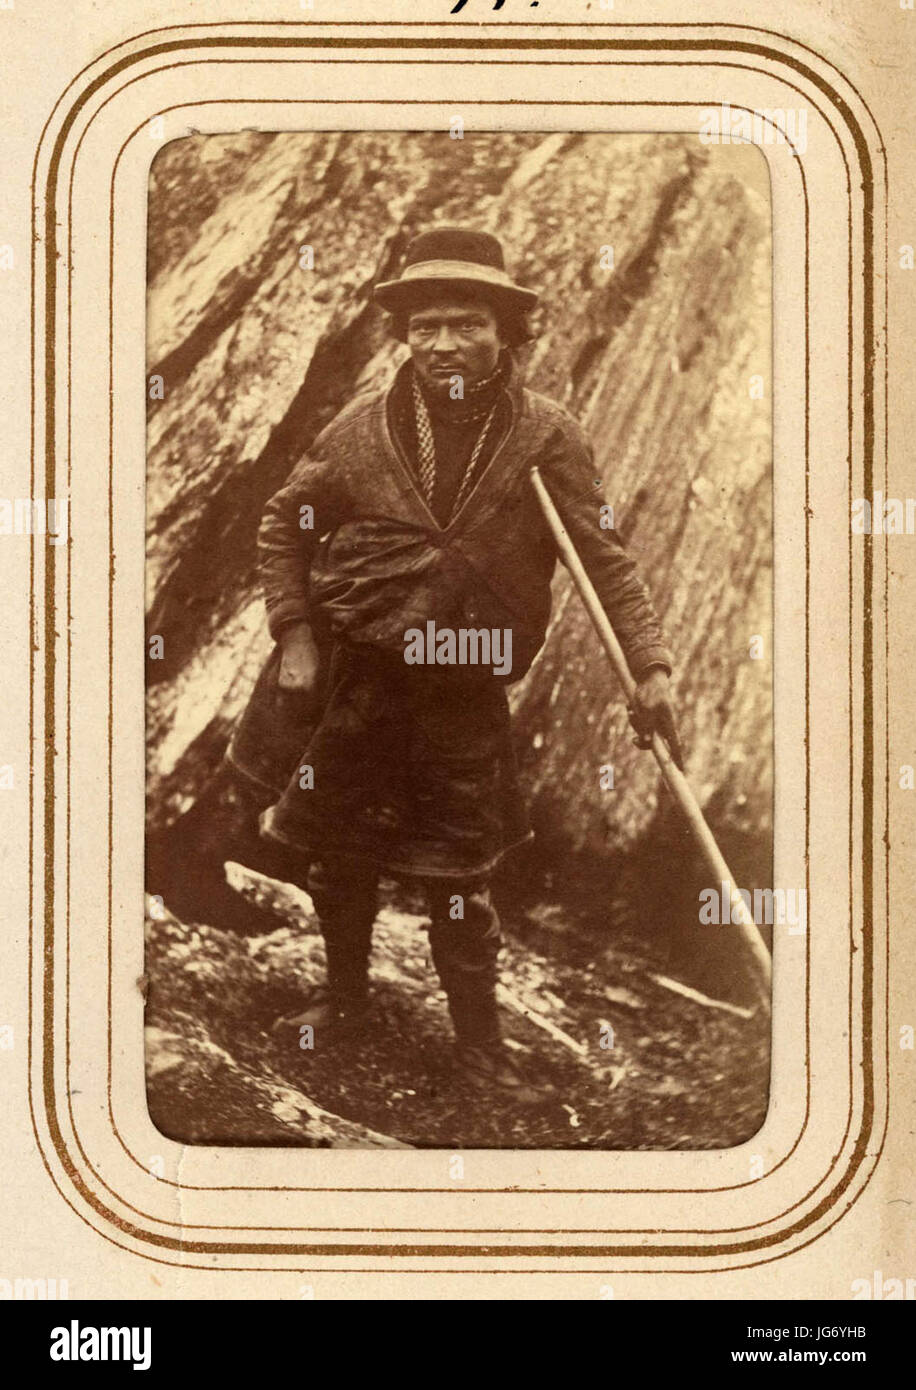 Samisk man med käpp. Lotten von Düben 1868 - Nordiska Museet - NMA.0033093 1 Stock Photo